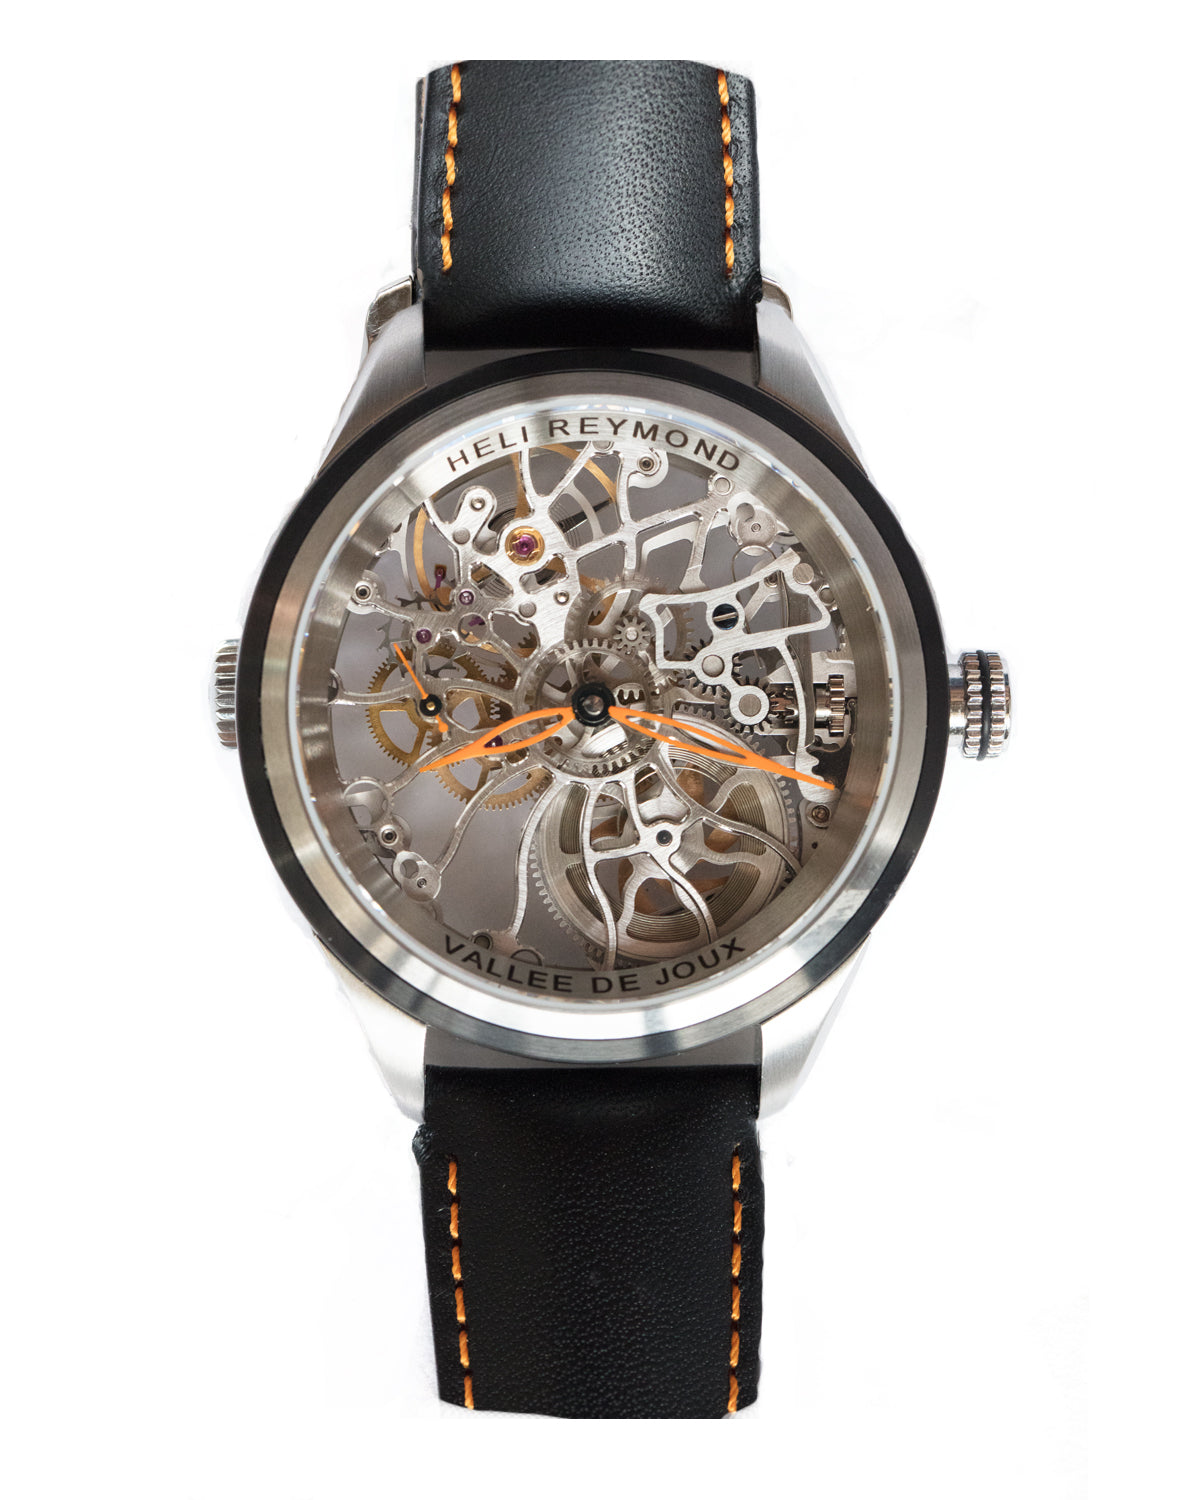 Heli Reymond Orange Hands Skeleton Watch T5010 Stainless Design Front Pic Bitcoin